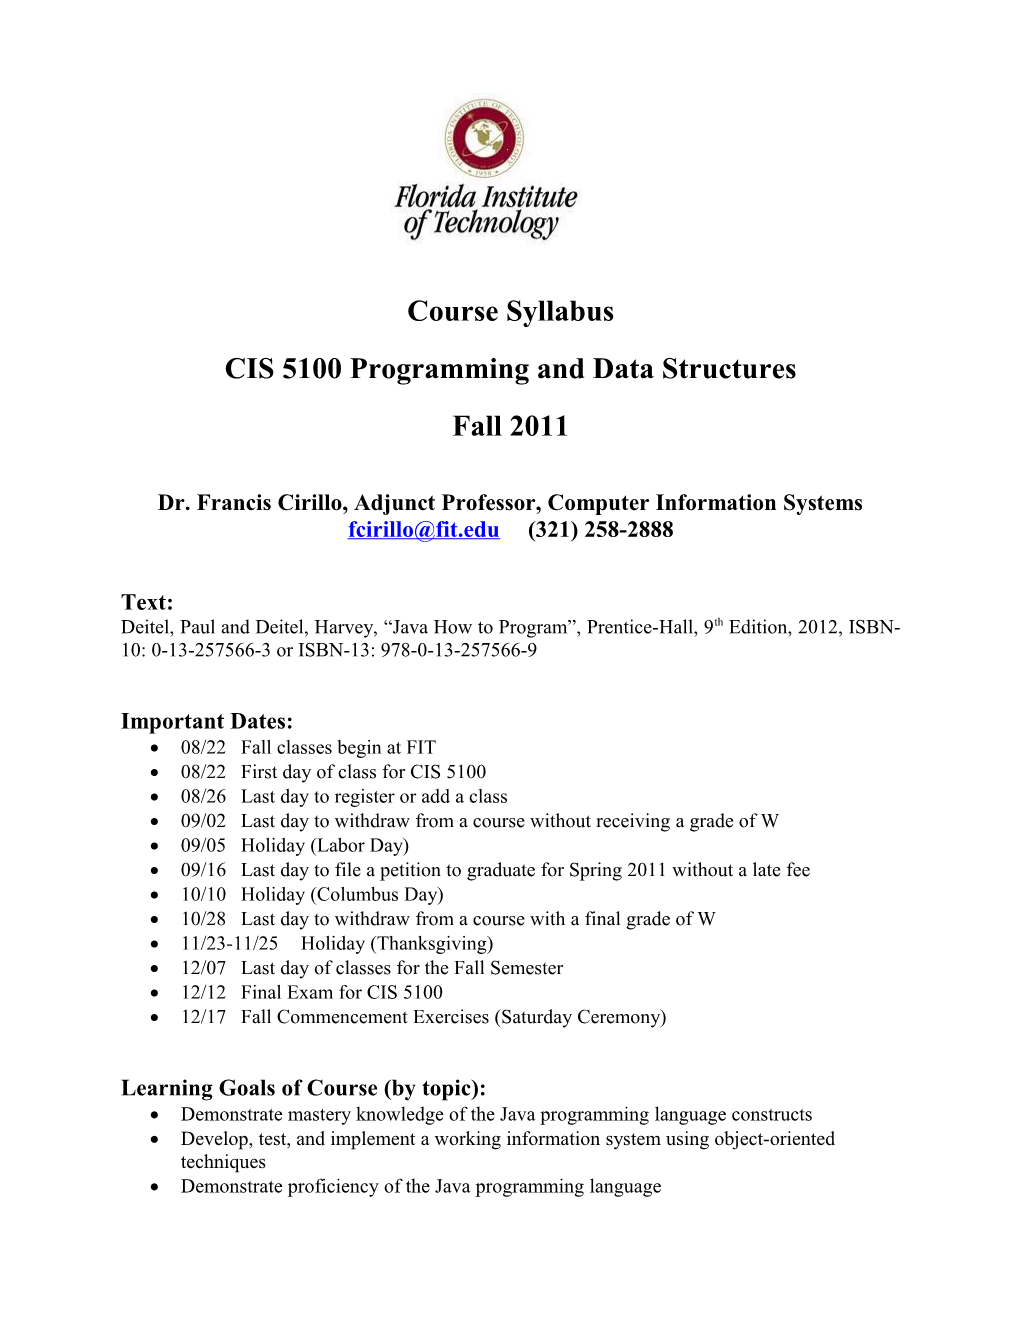 CIS 5220 Computer Organization